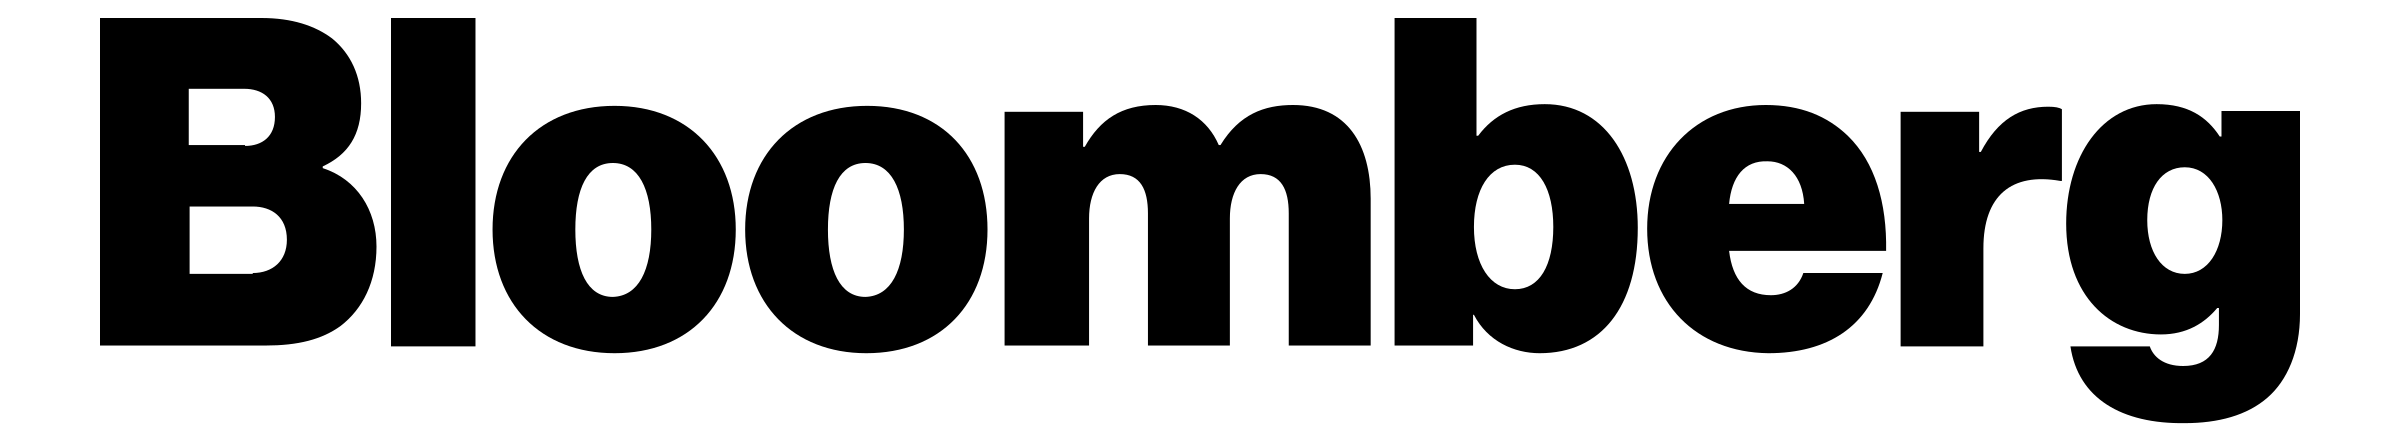 bloomberg-logo-transparent.png